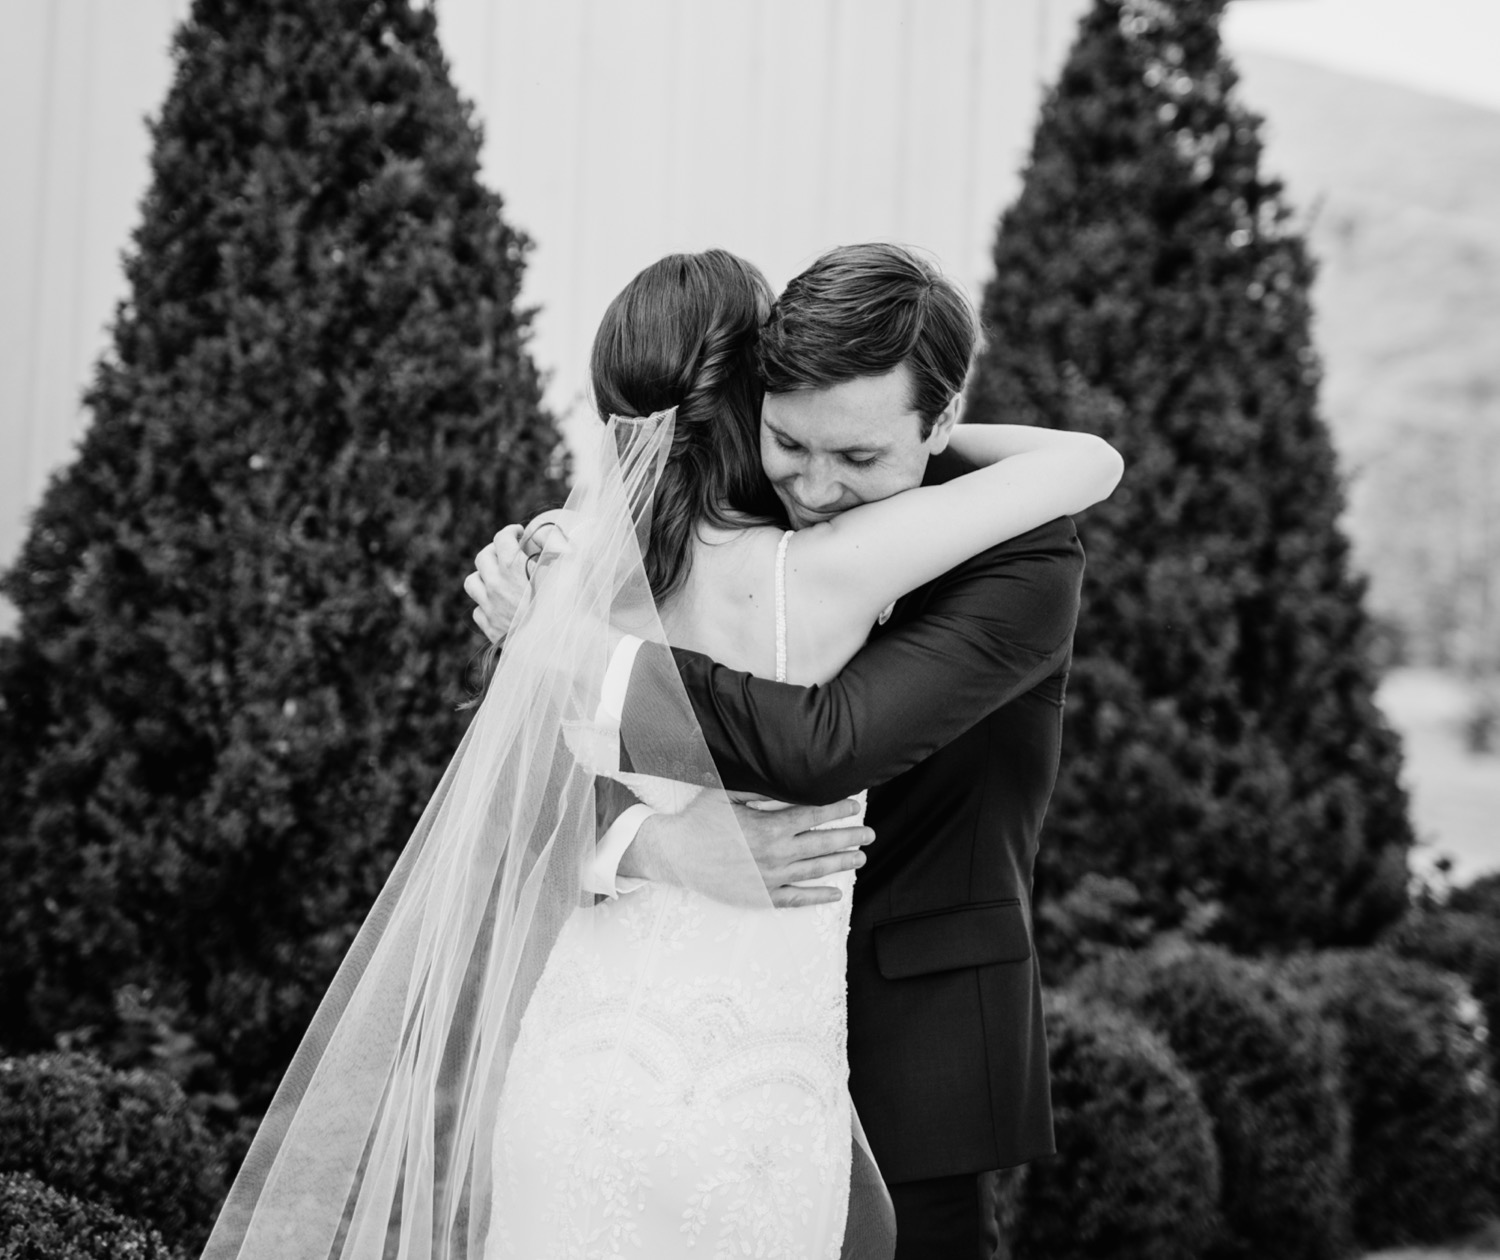 First look between bride and groom before wedding ceremony in Charlottesville, VA